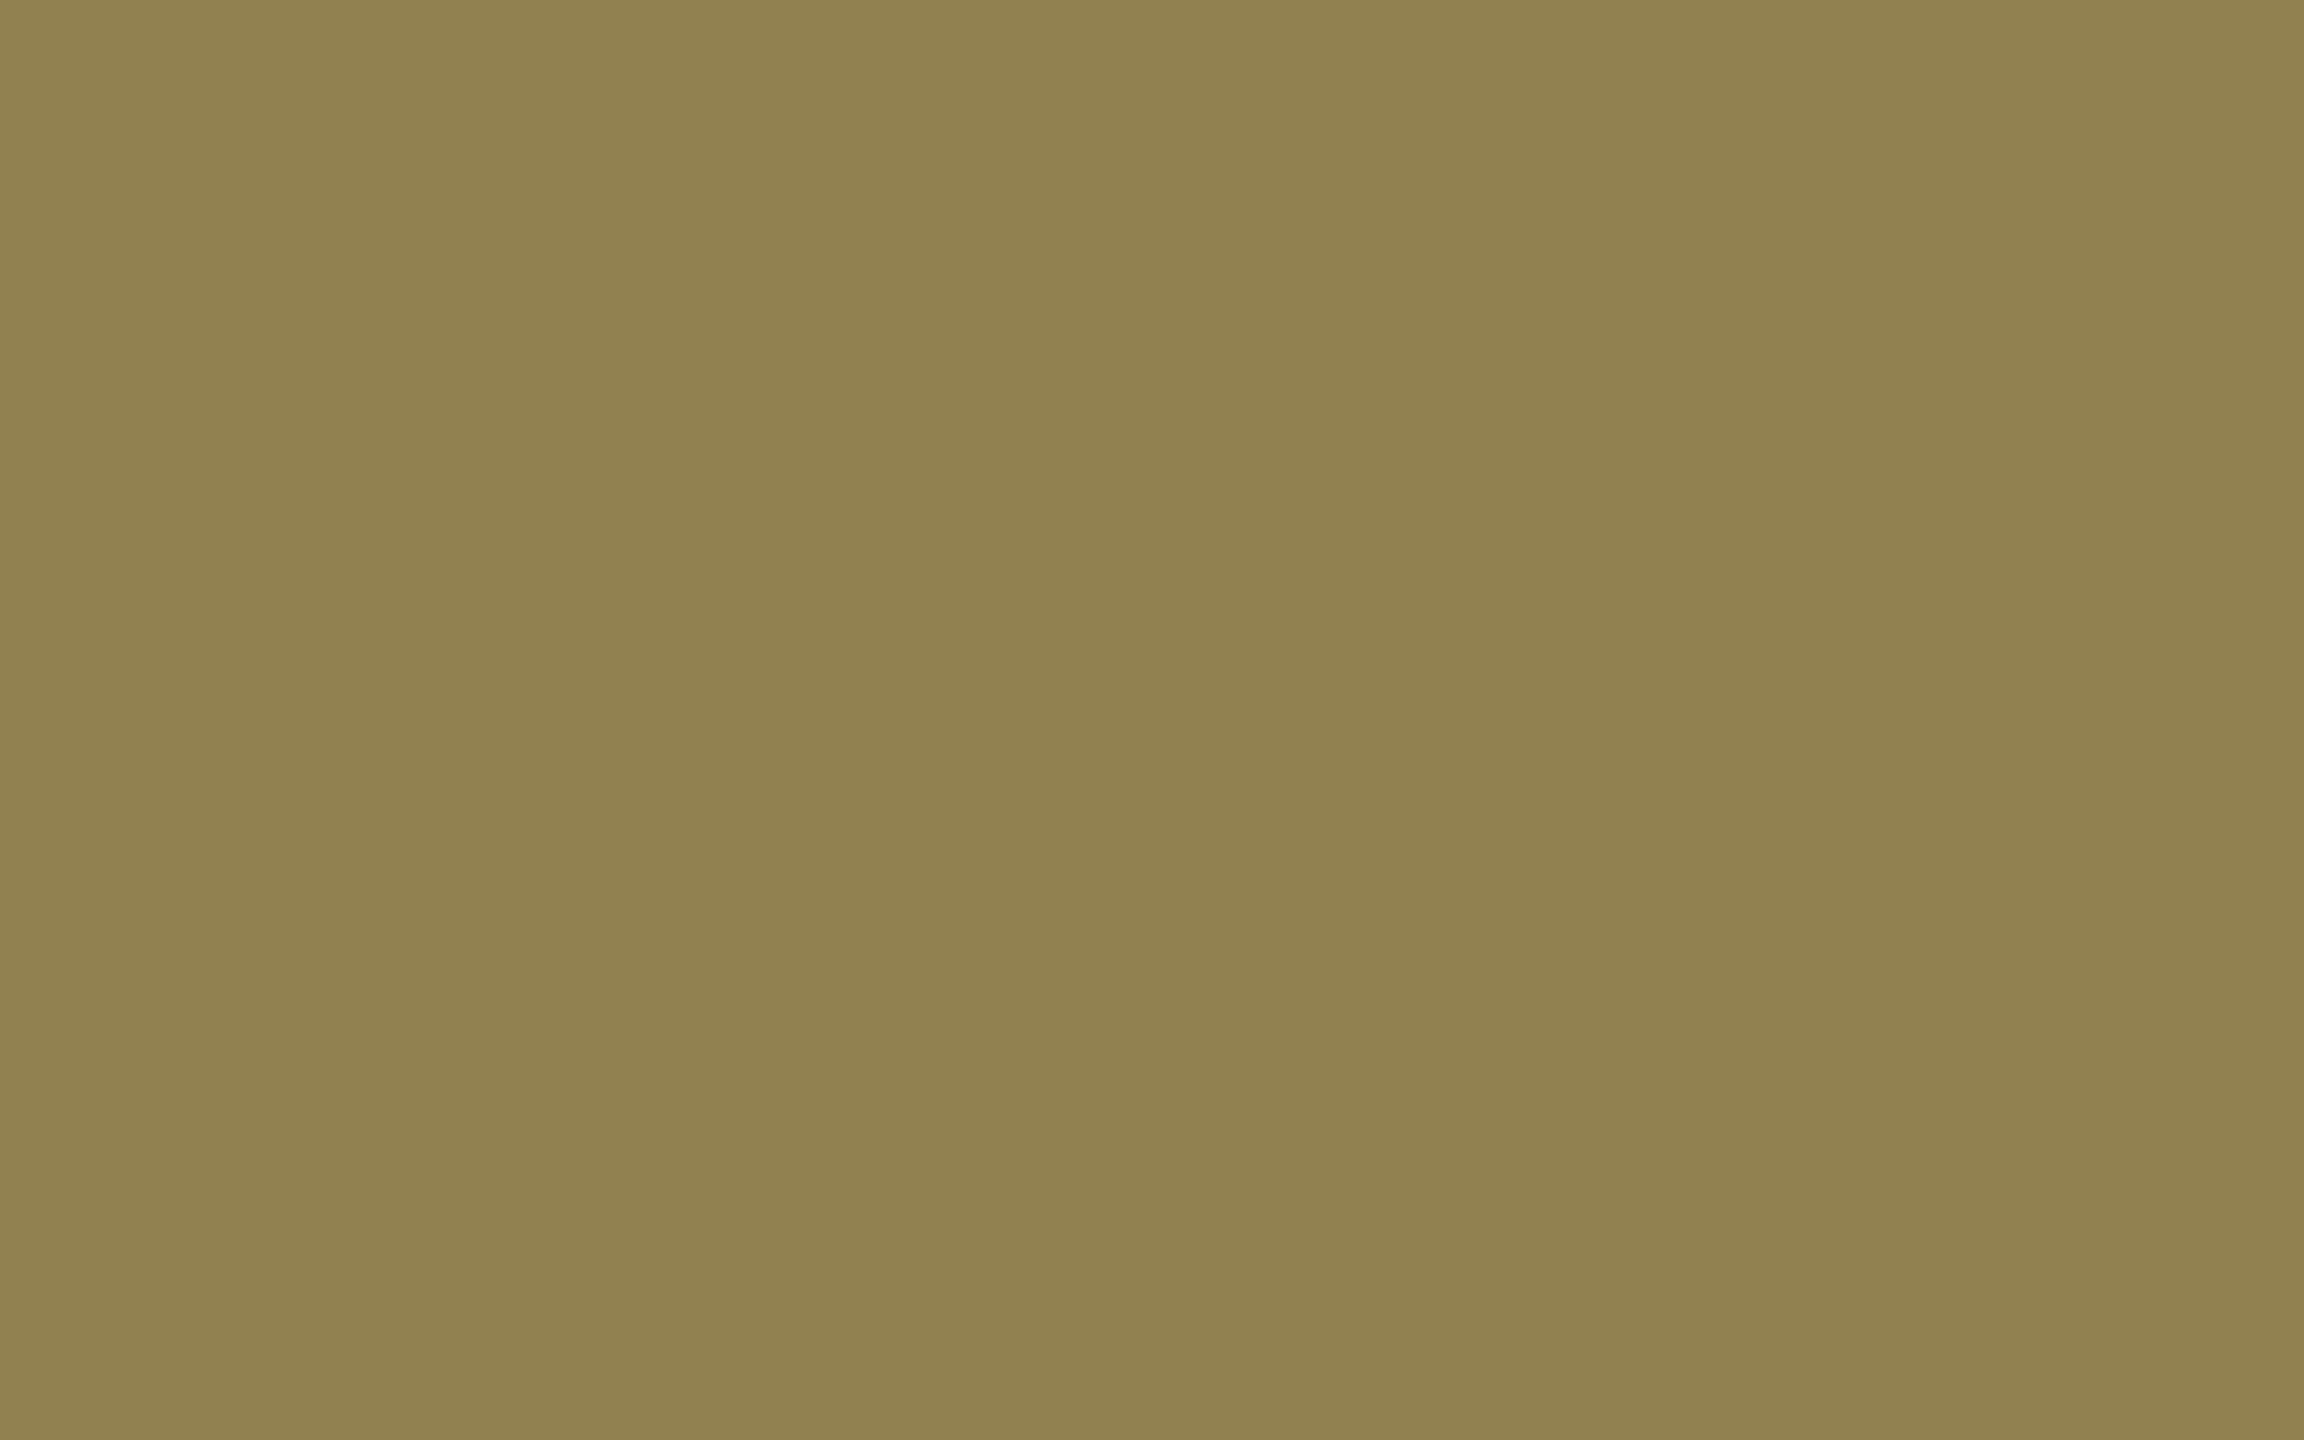 2304x1440 Dark Tan Solid Color Background